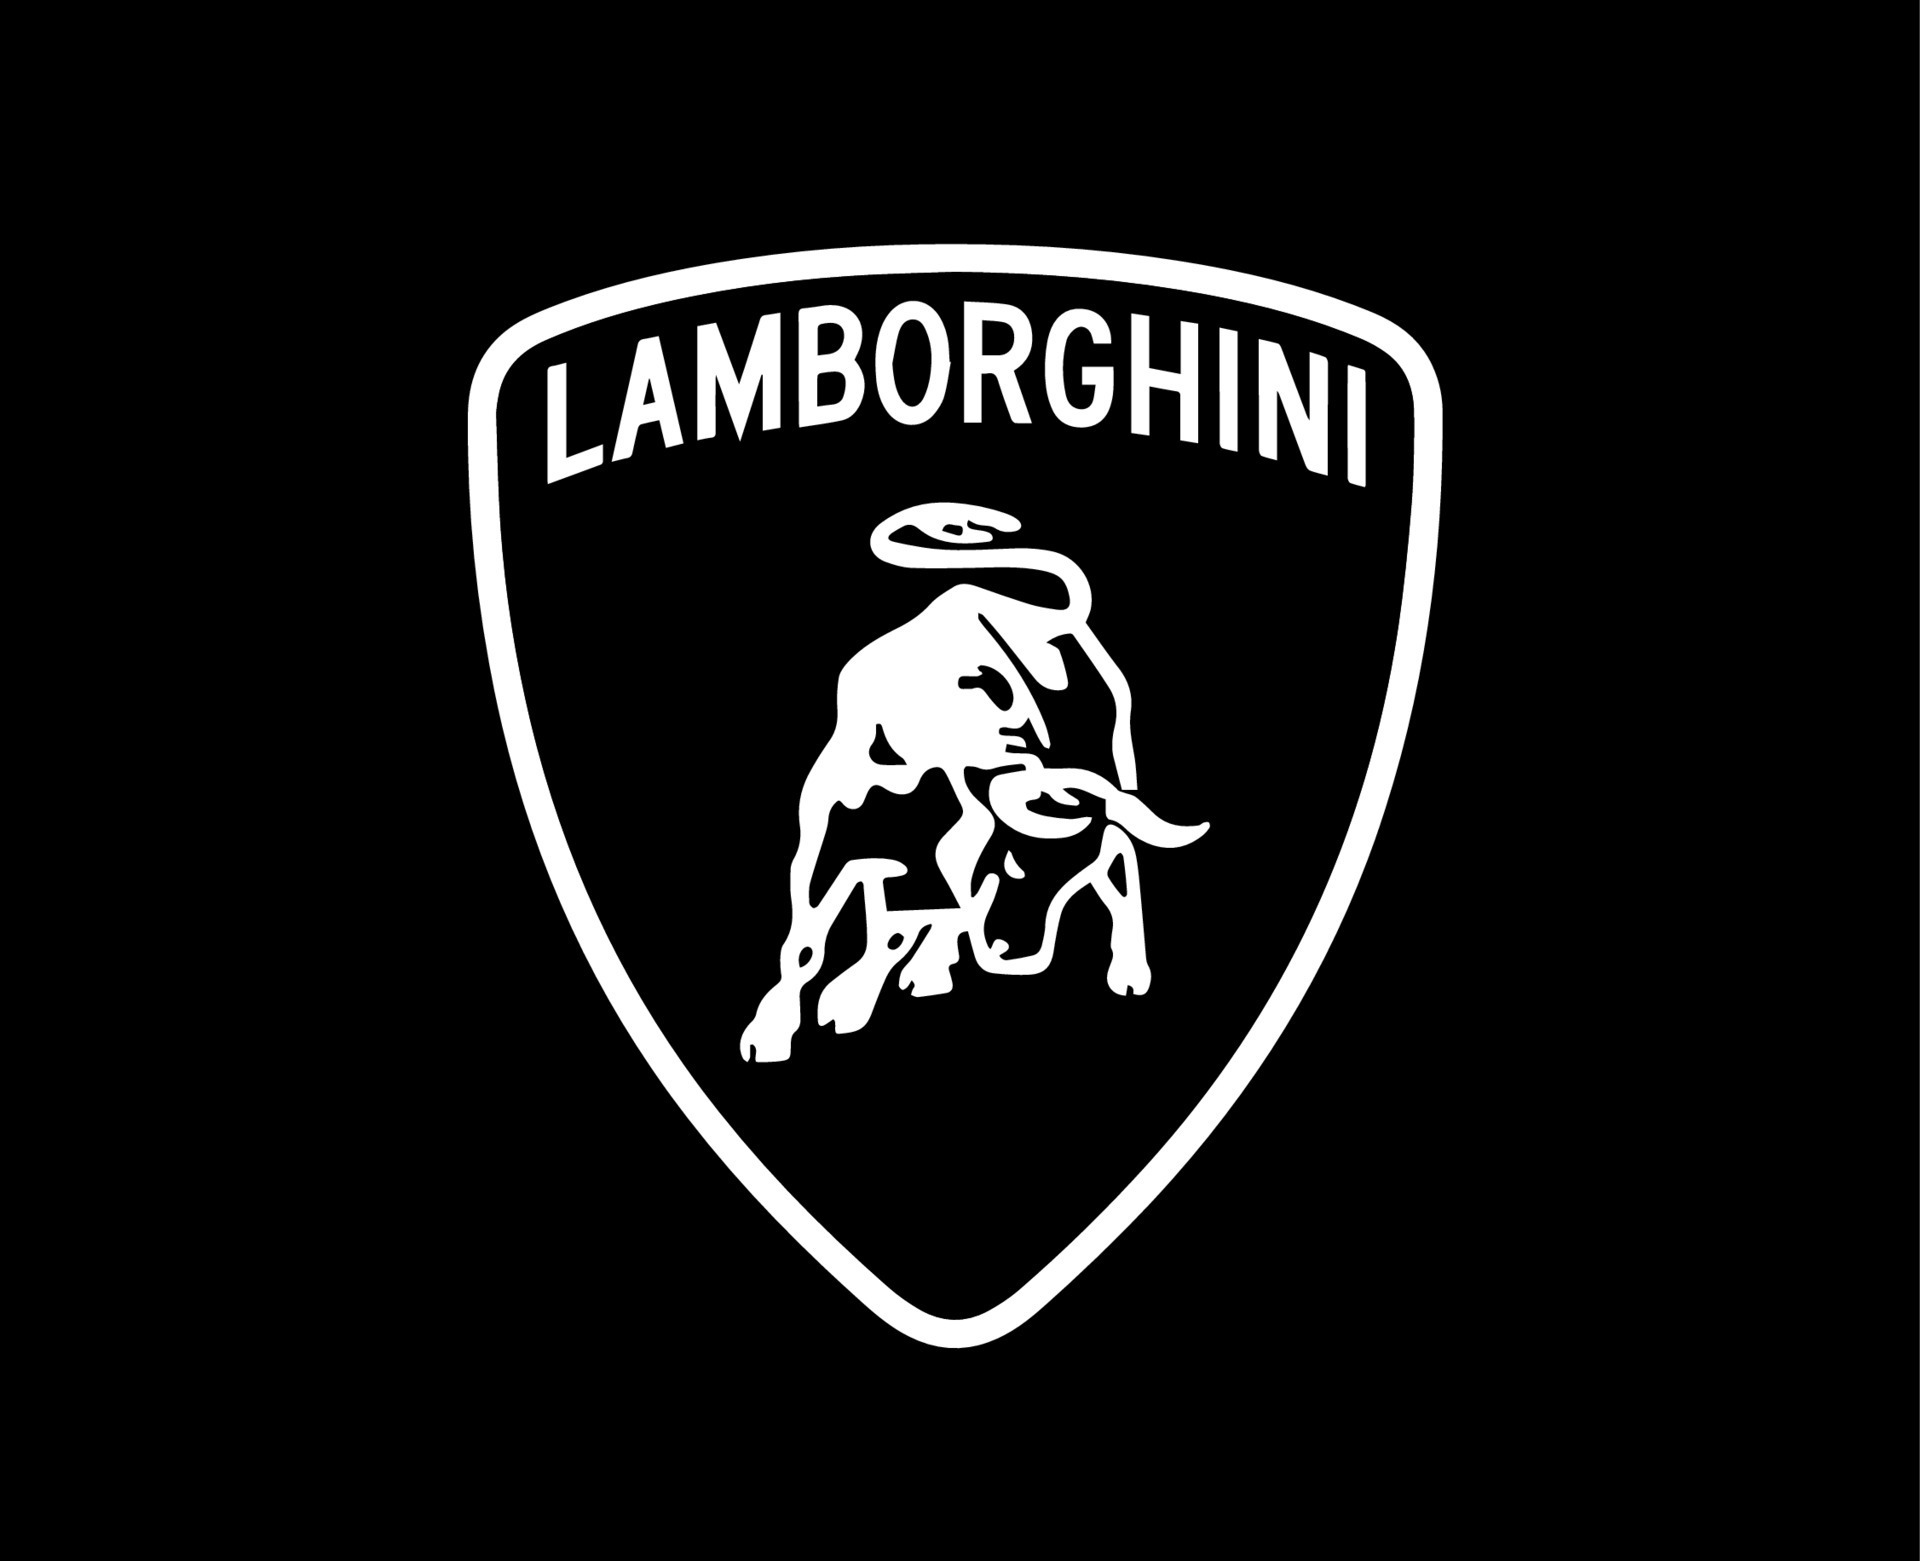 lamborghini marca logotipo carro símbolo branco Projeto italiano automóvel  vetor ilustração com Preto fundo 20502472 Vetor no Vecteezy